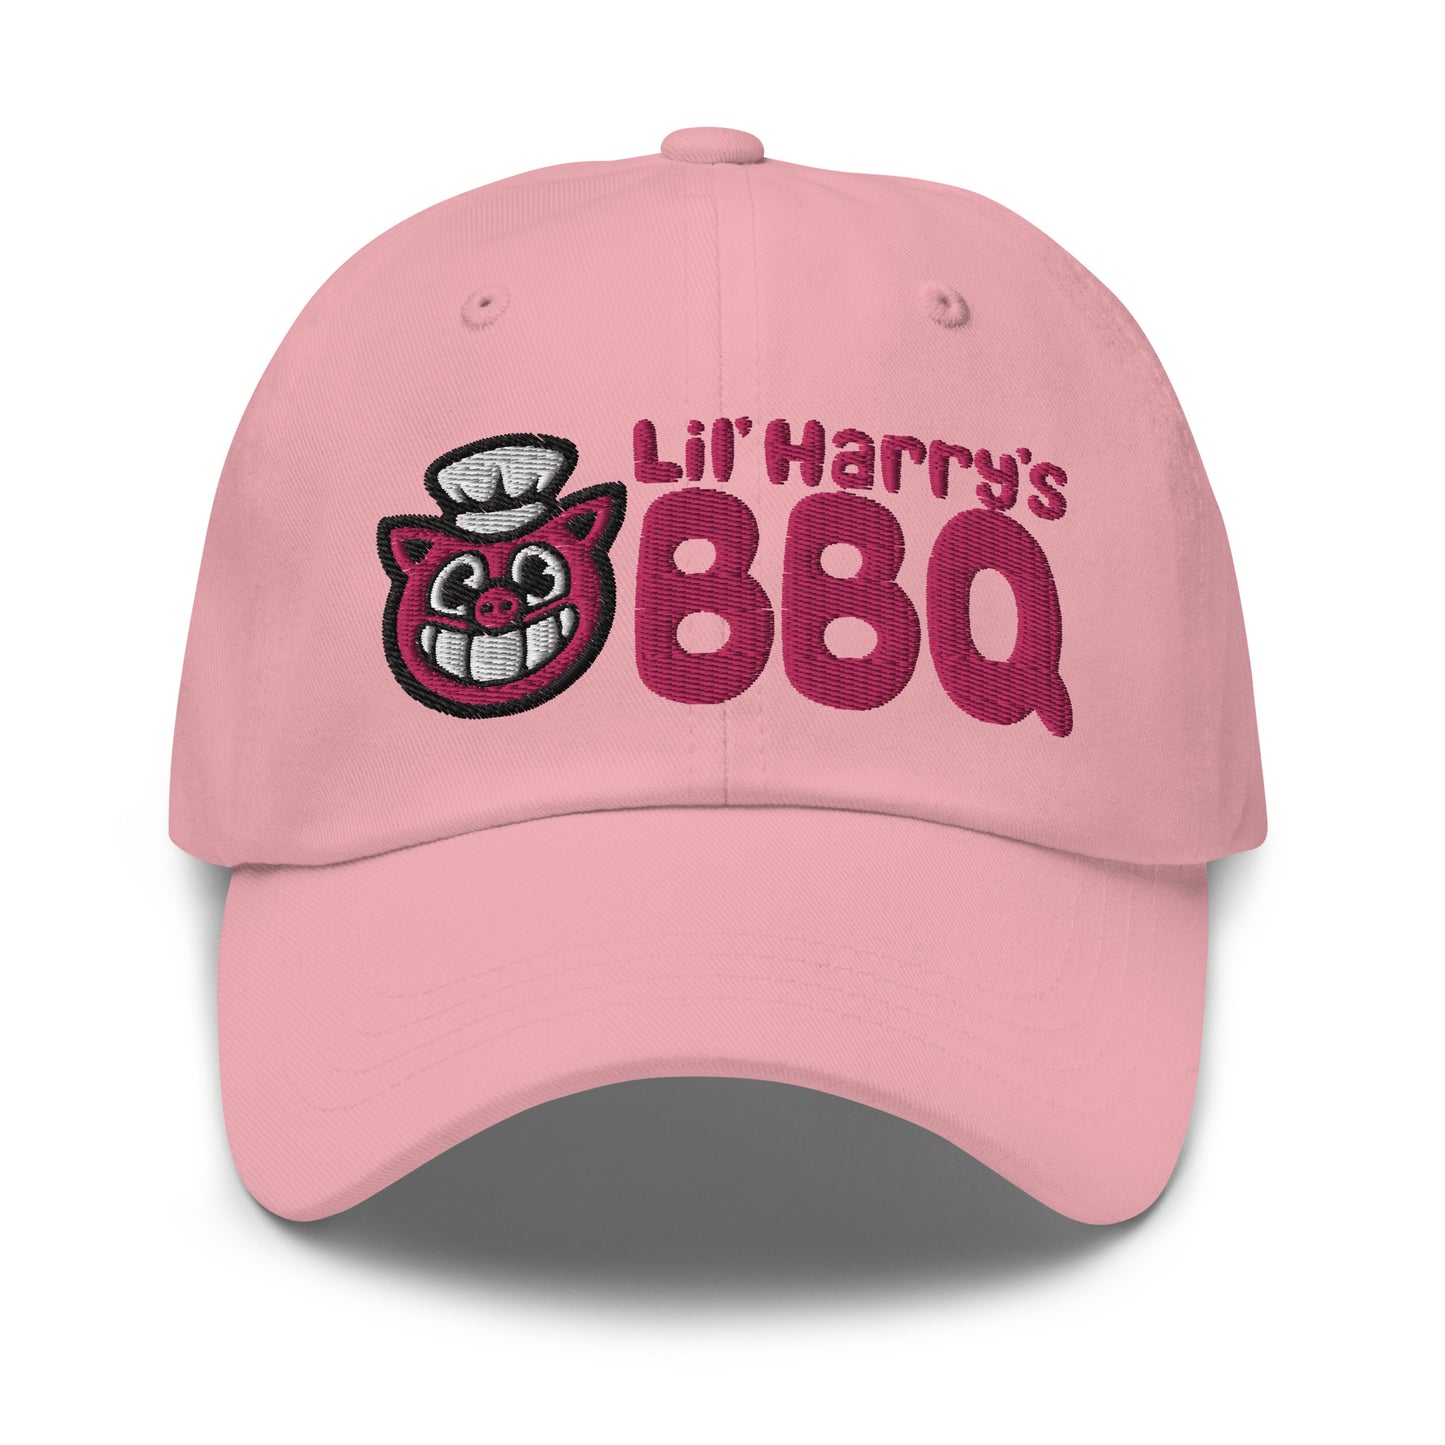 Lil' Harry's BBQ Dad Hat